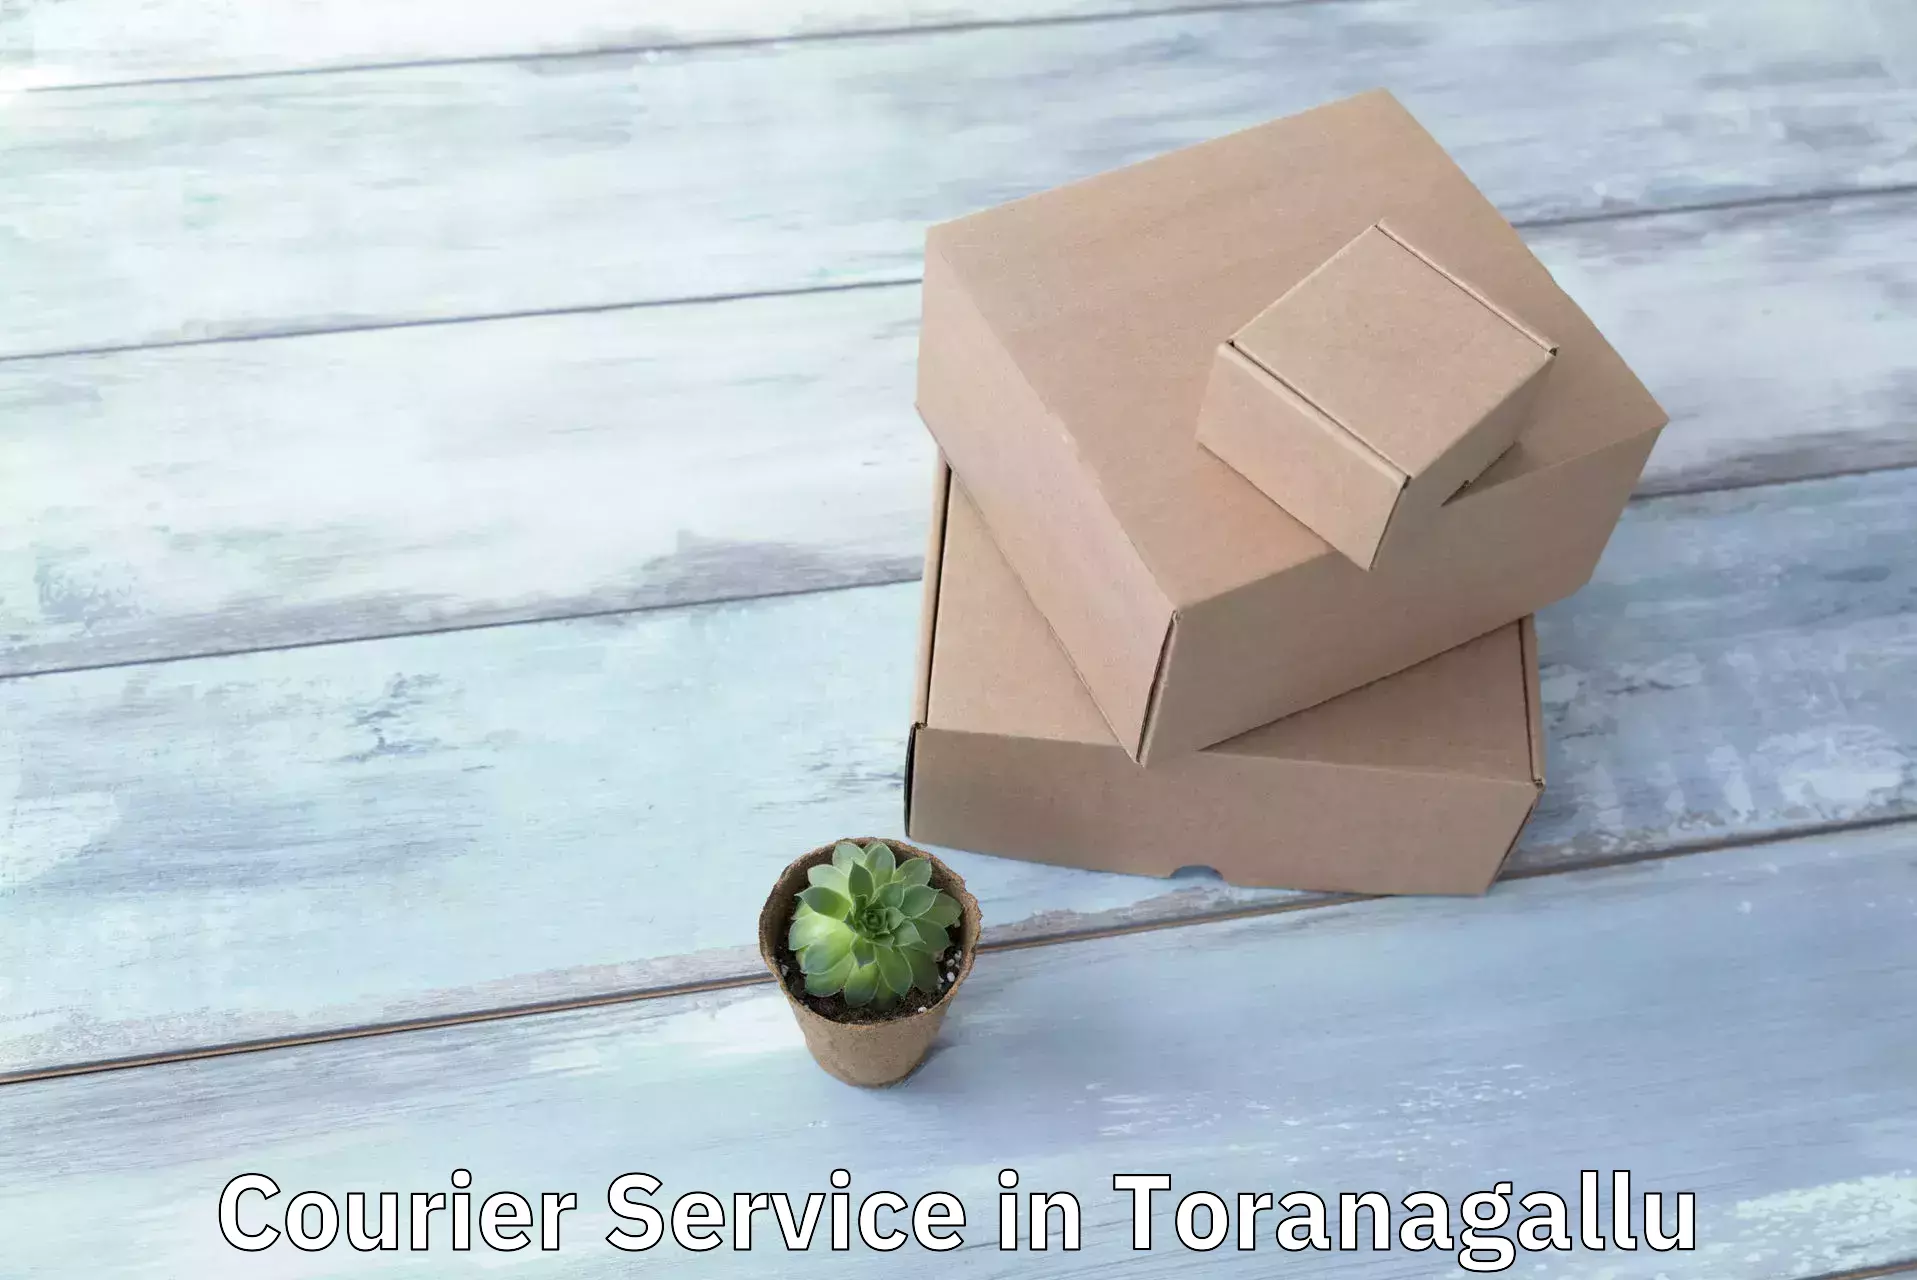 Logistics and distribution in Toranagallu